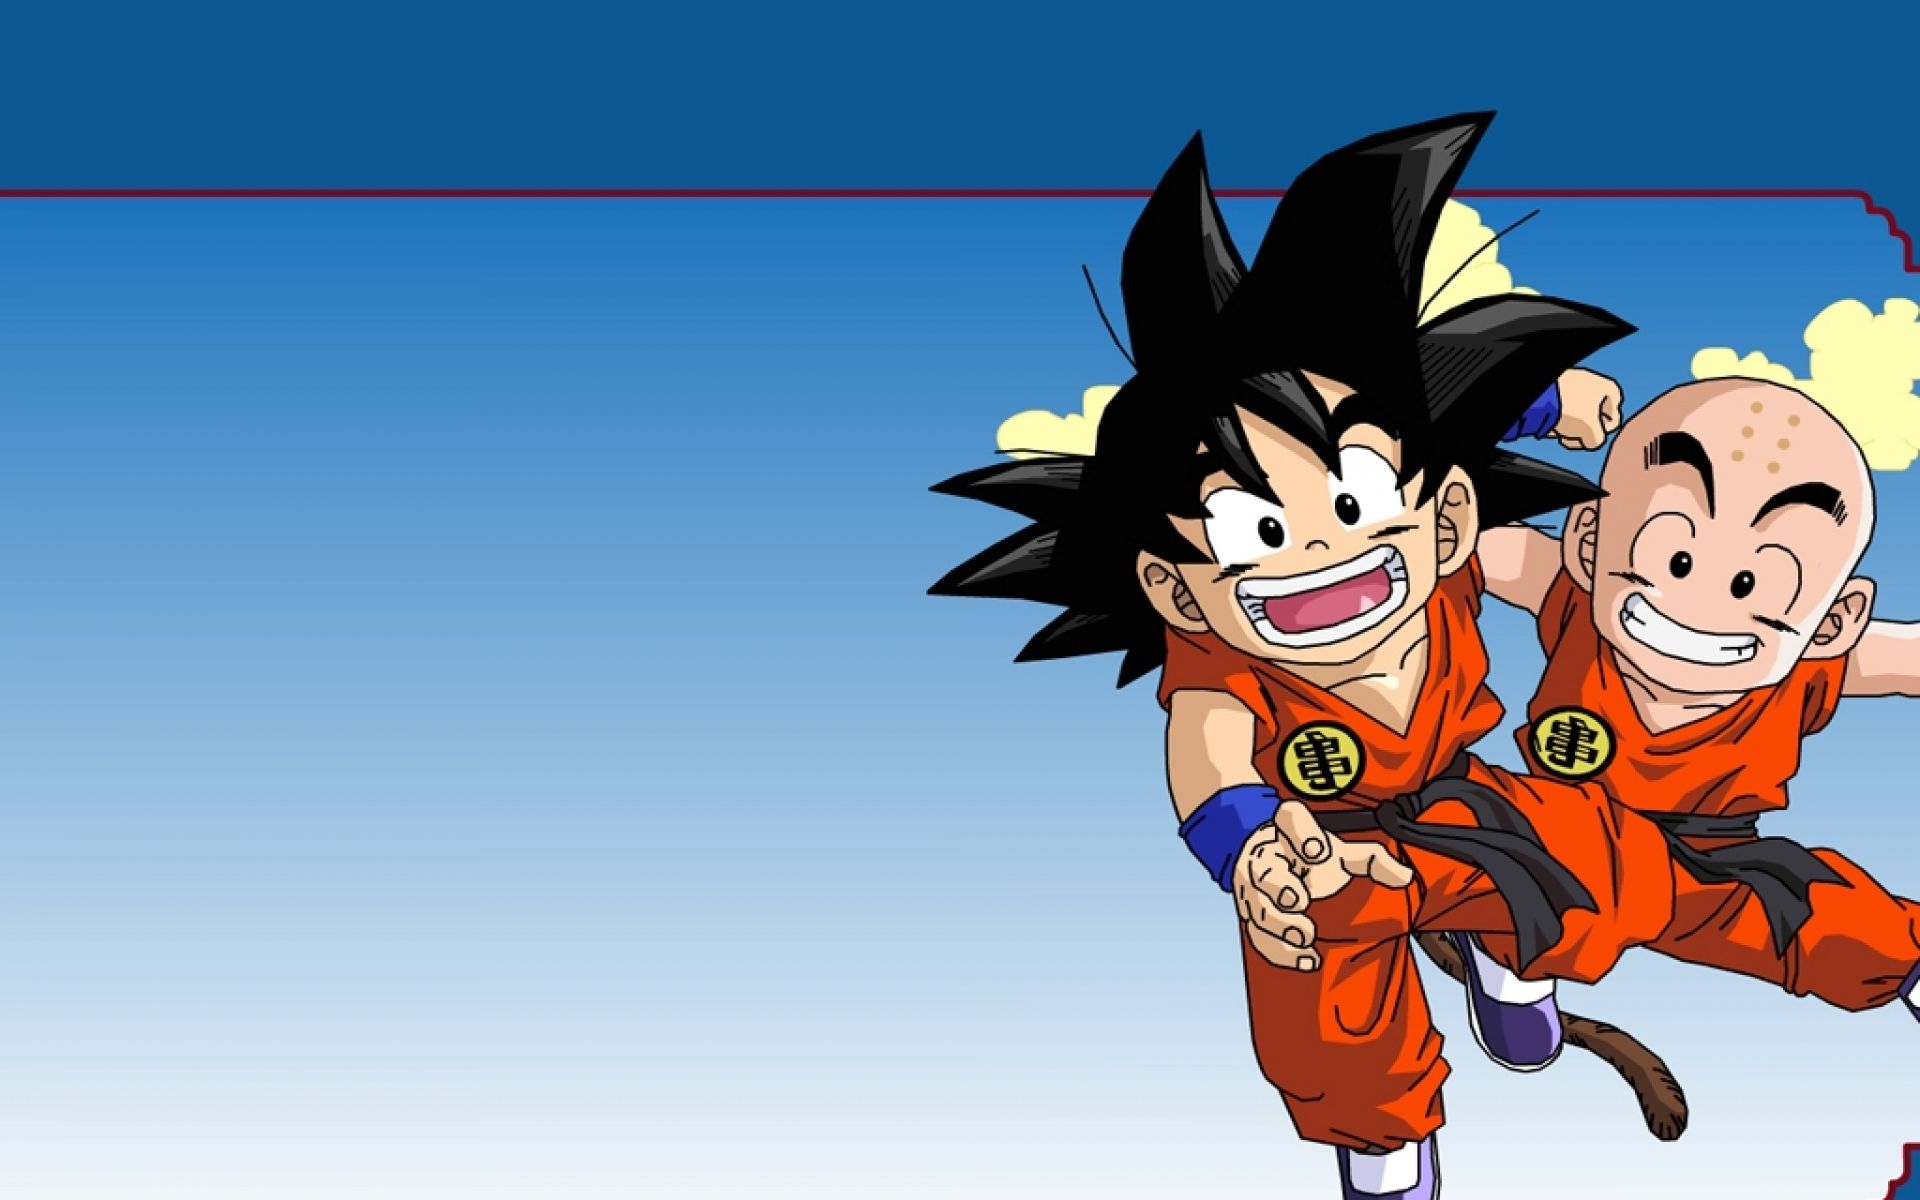 Fondos de pantalla de Goku pequeño - FondosMil